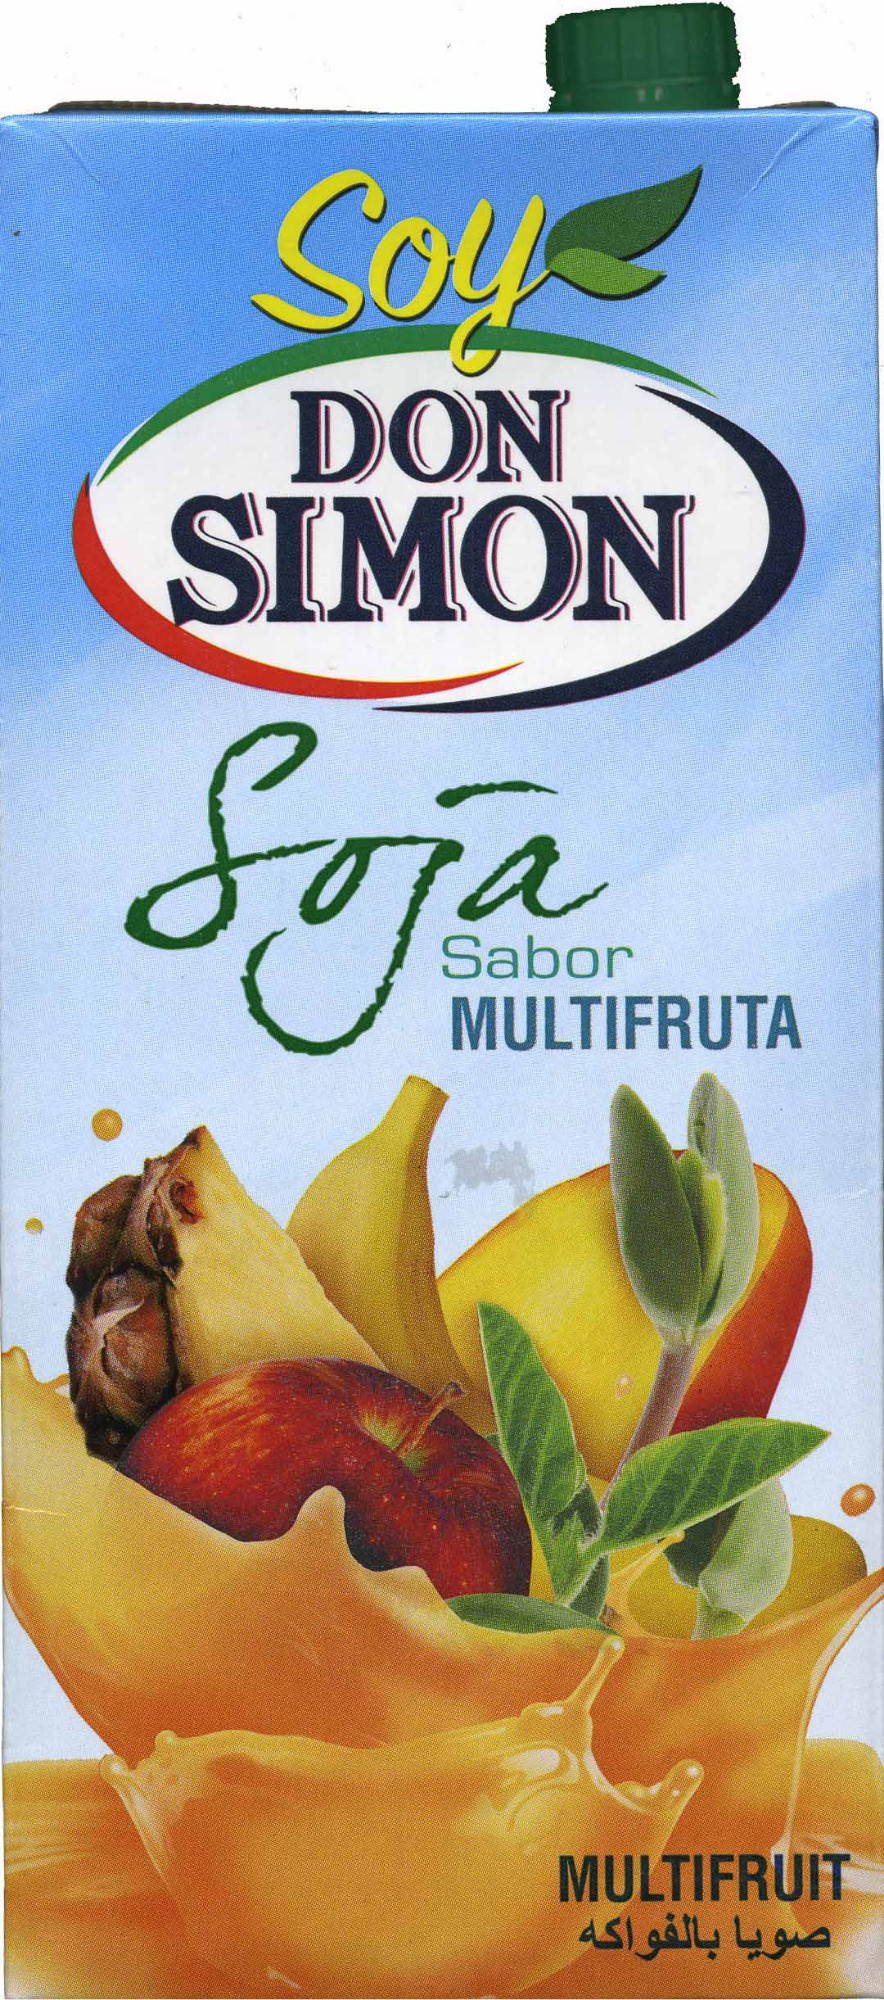 Soy Don Simón multifruta - Product - es